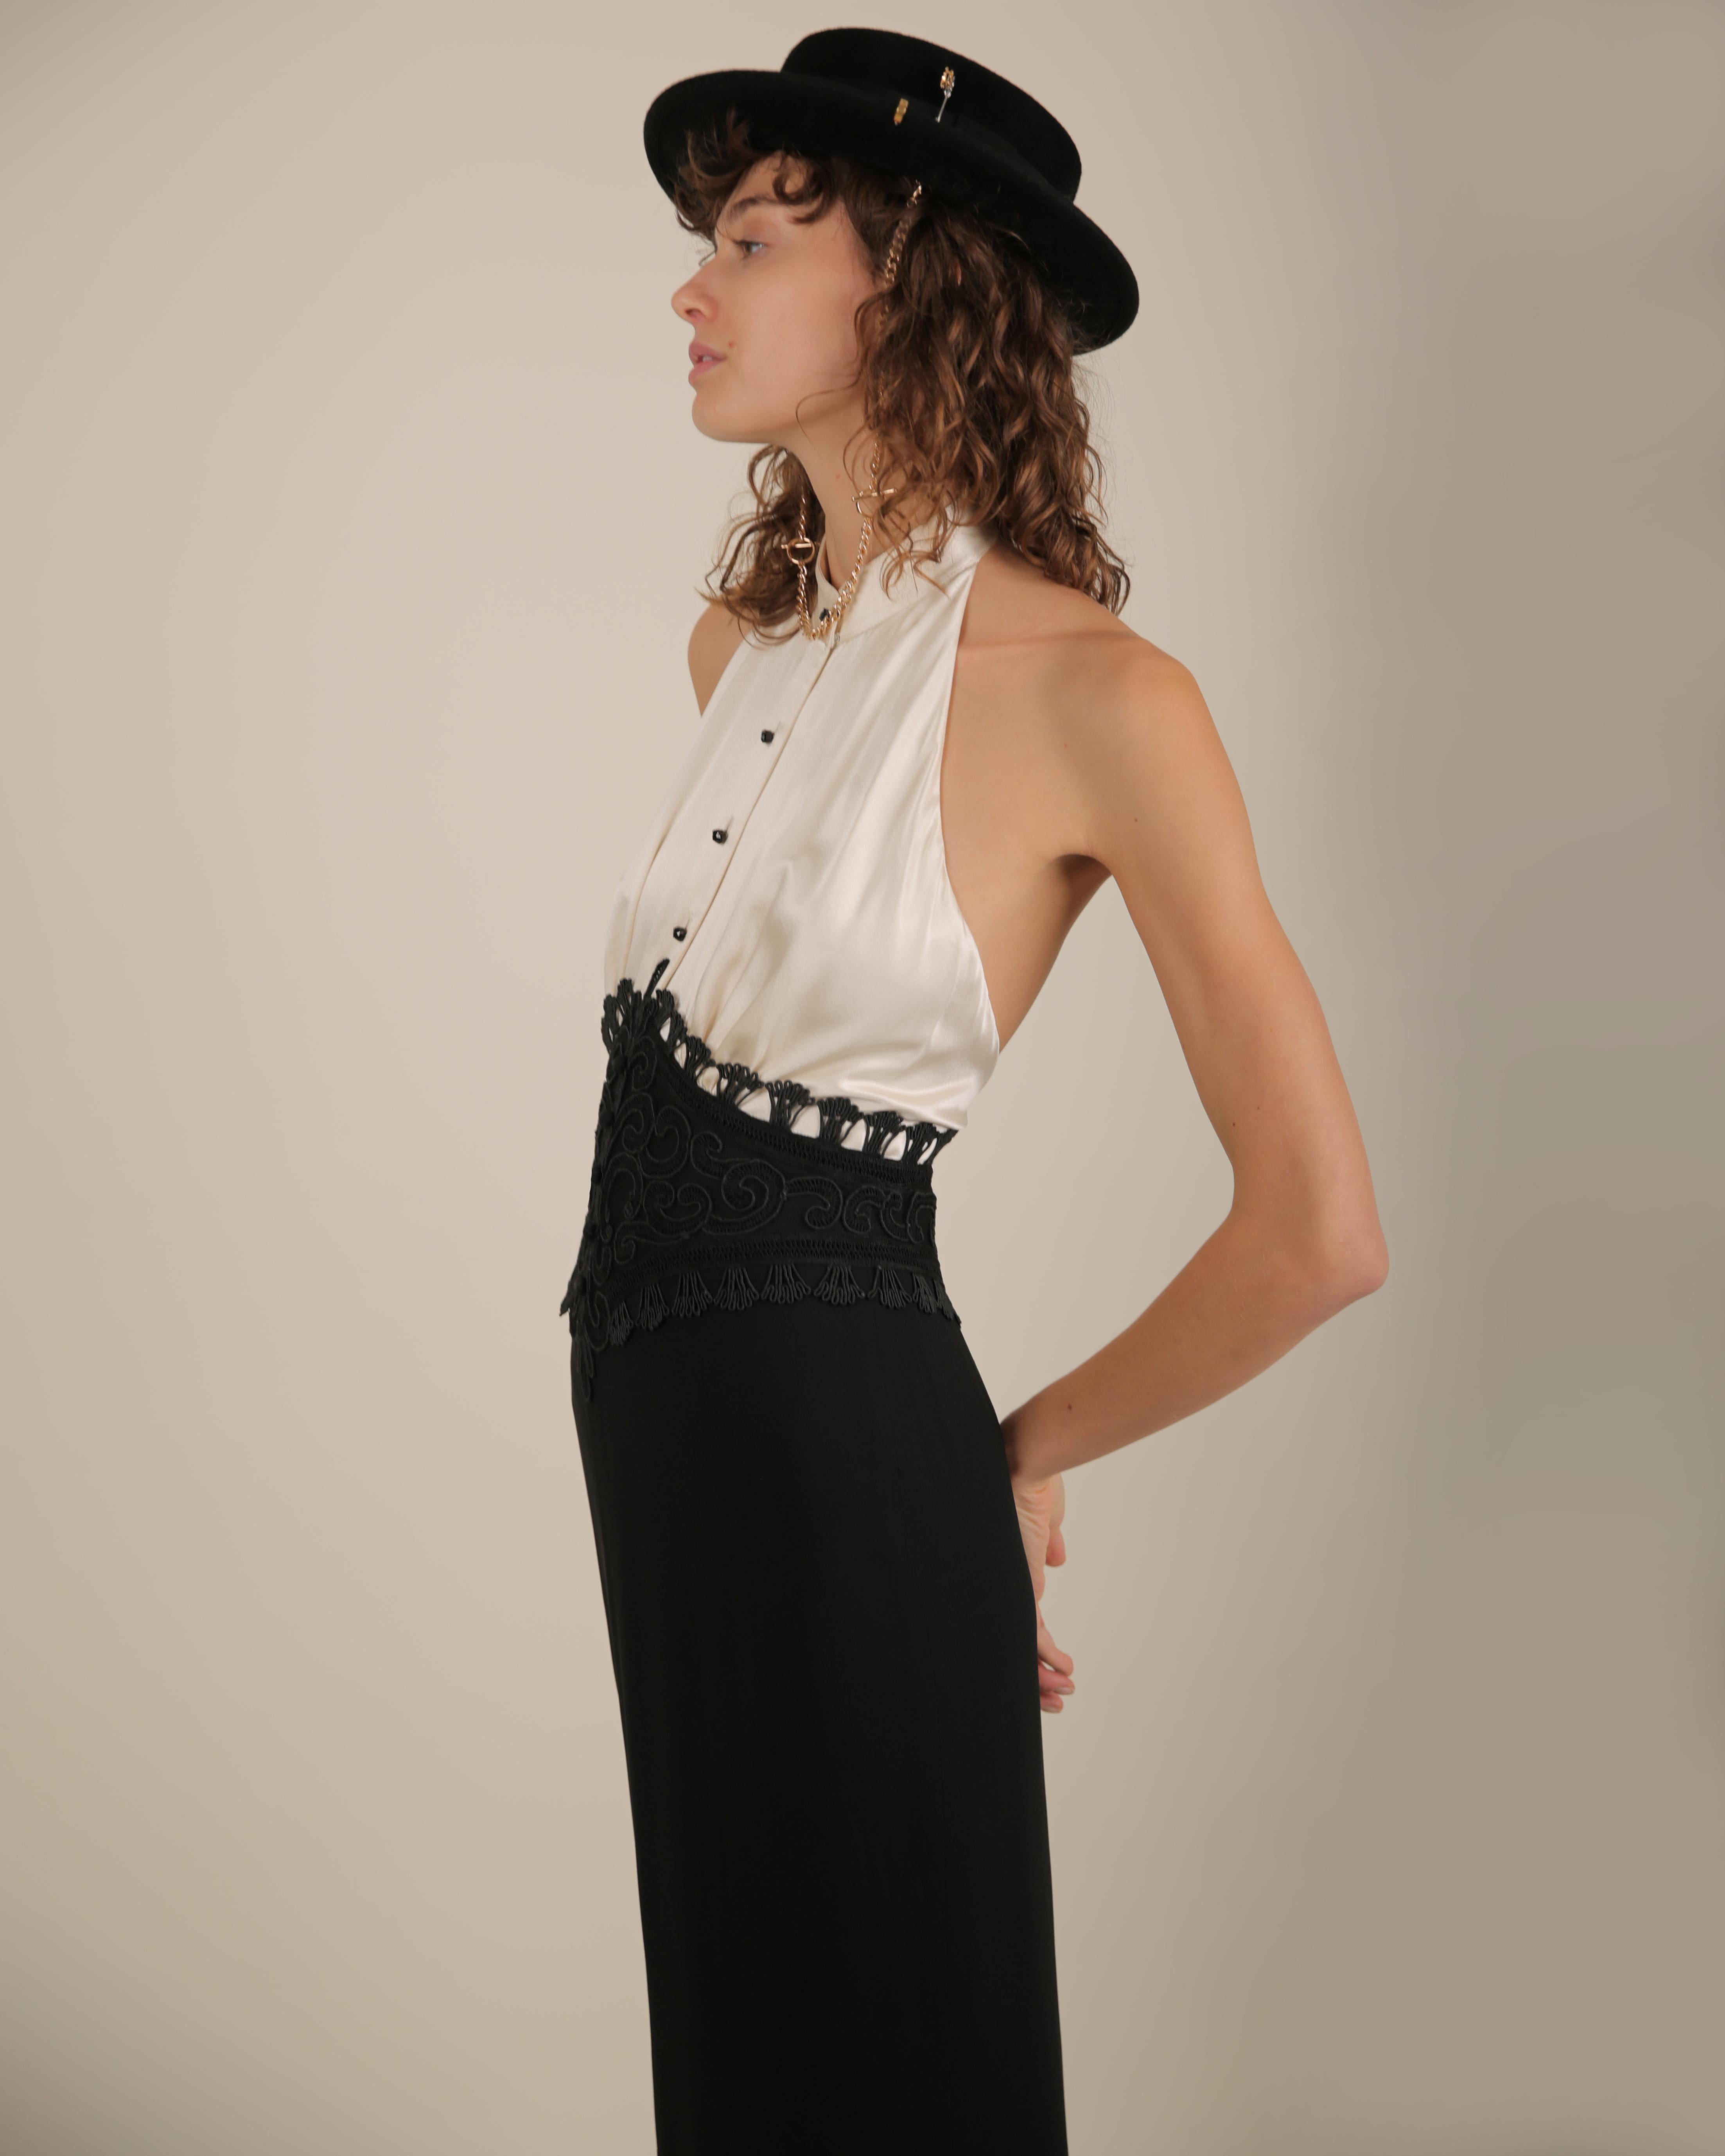 Ralph Lauren SS 2013 black white sleeveless halter backless button up dress gown For Sale 6